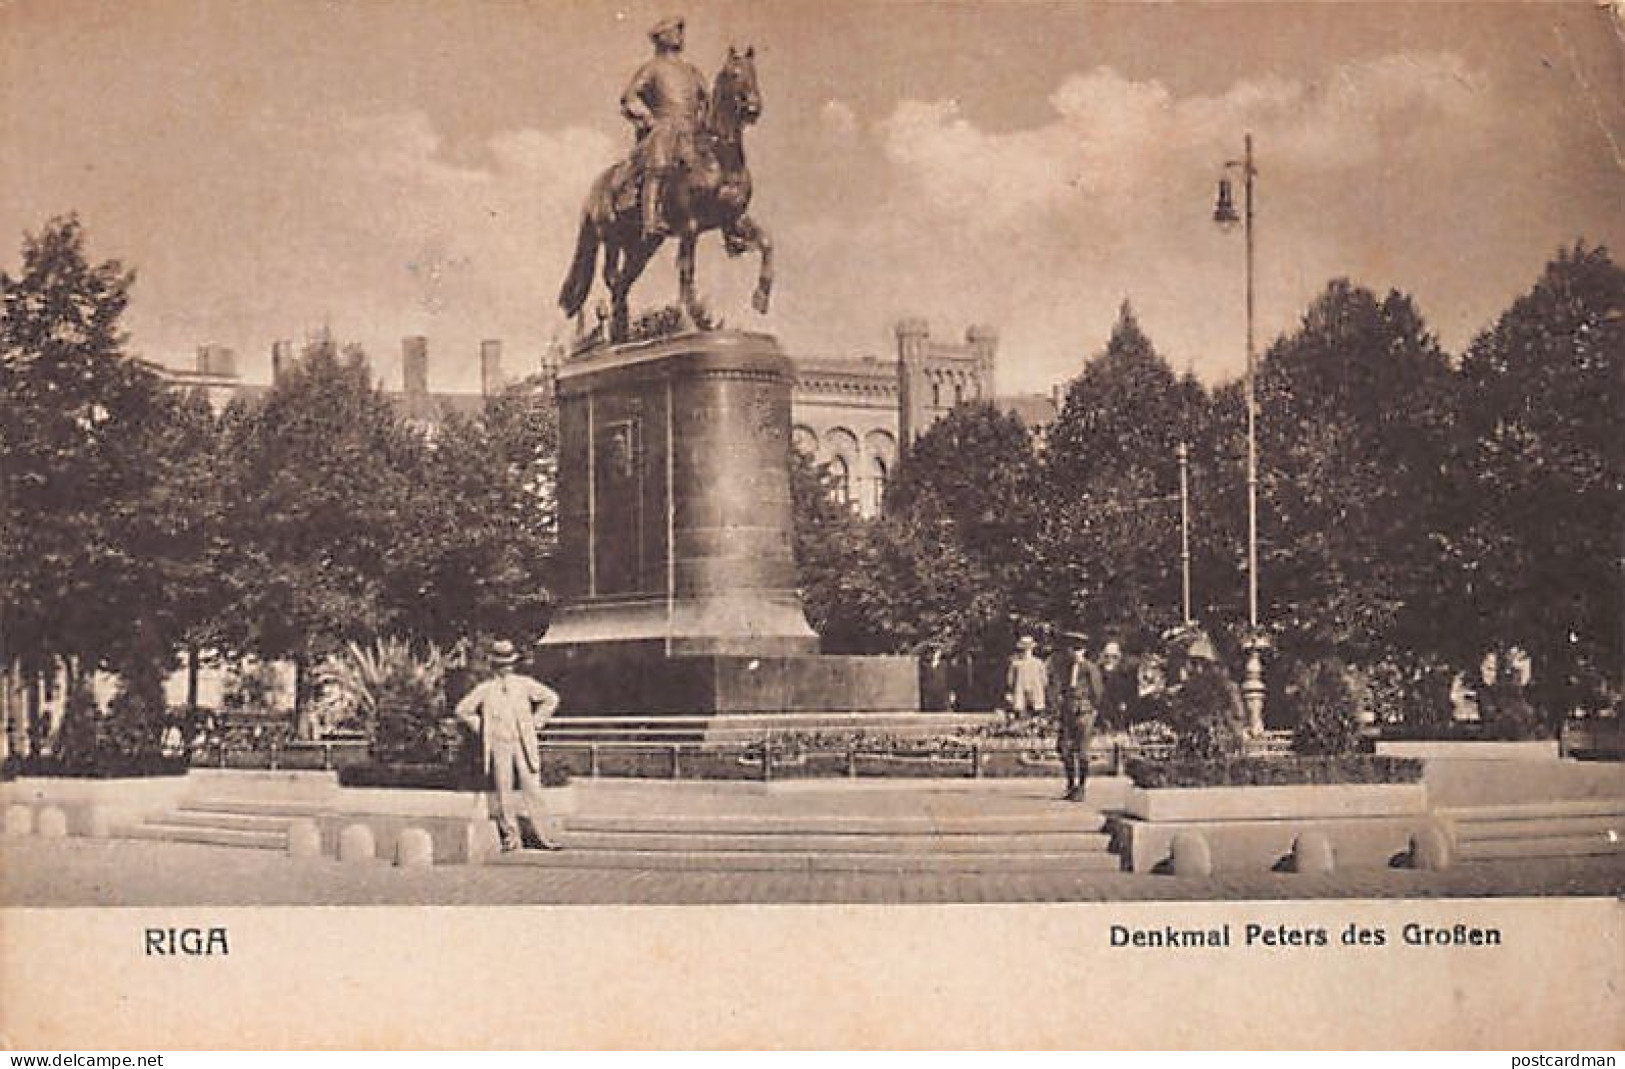 Latvia - RIGA - Peter The Great Monument - Publ. Dr. Trenkler & Co. Ser. 164 - 11 - Lettonie